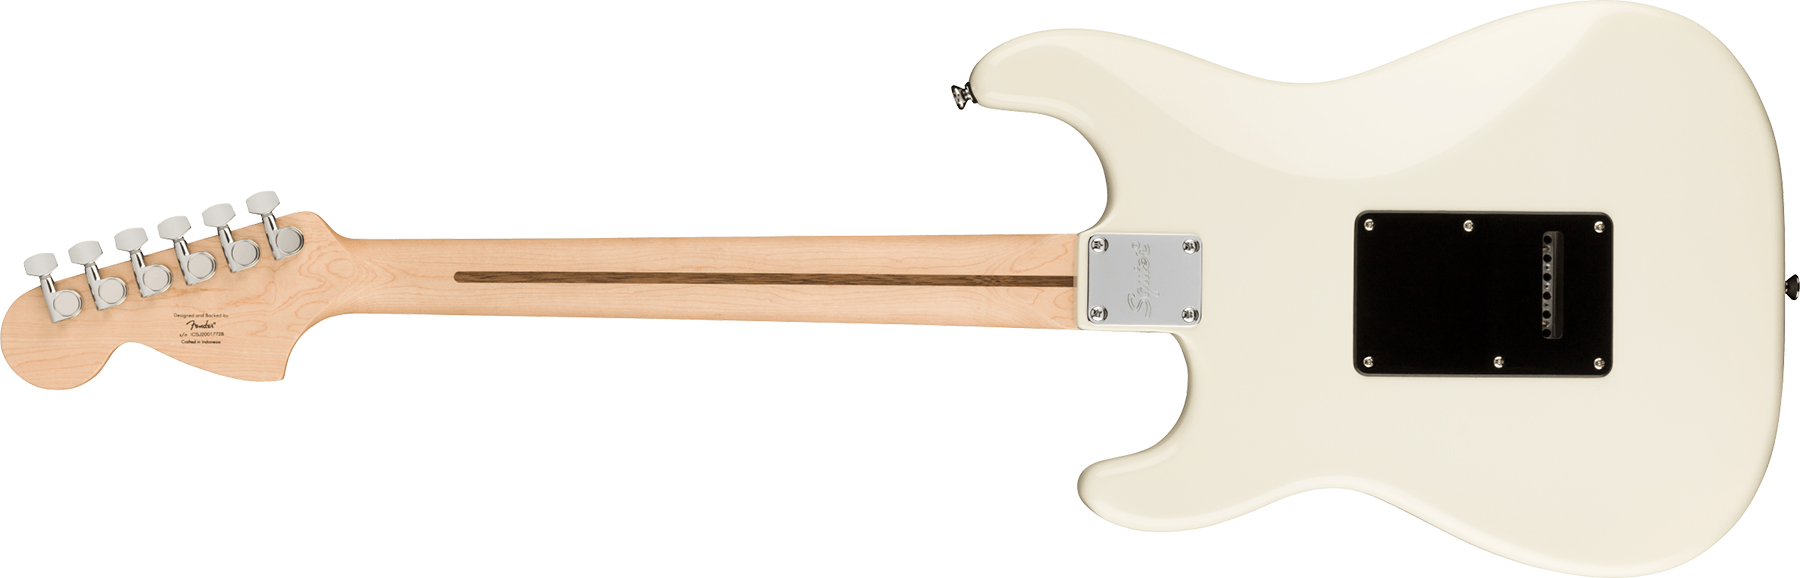 Squier Strat Affinity 2021 Hh Trem Lau - Olympic White - E-Gitarre in Str-Form - Variation 1